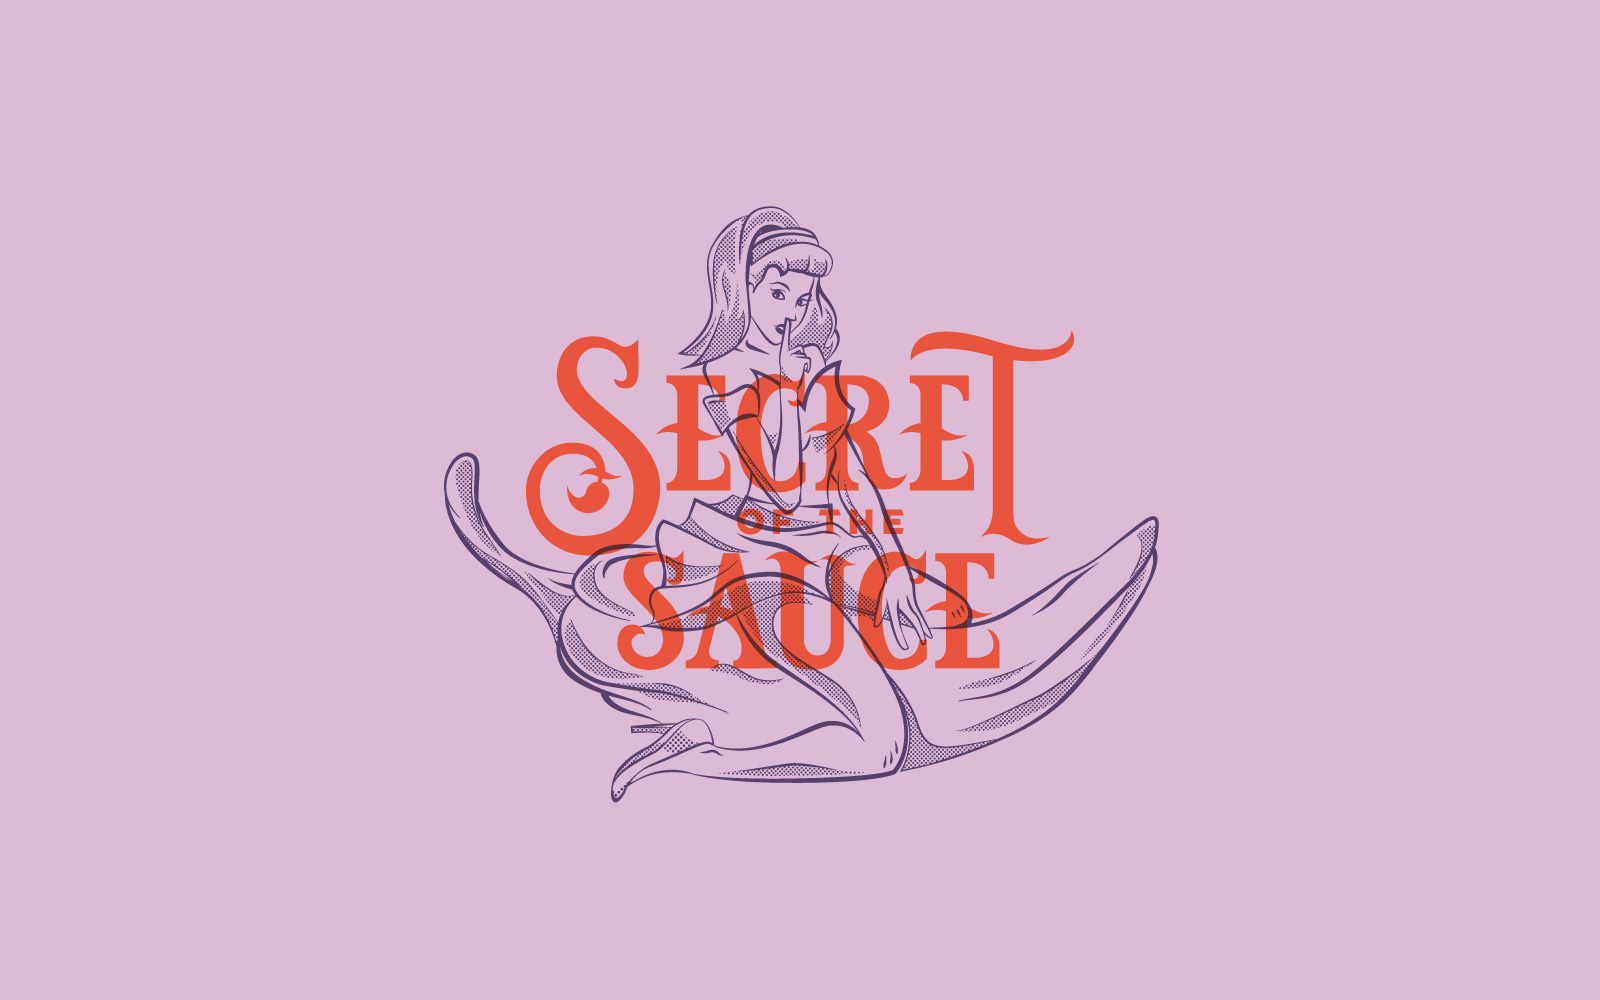 Secret Of The Sauce